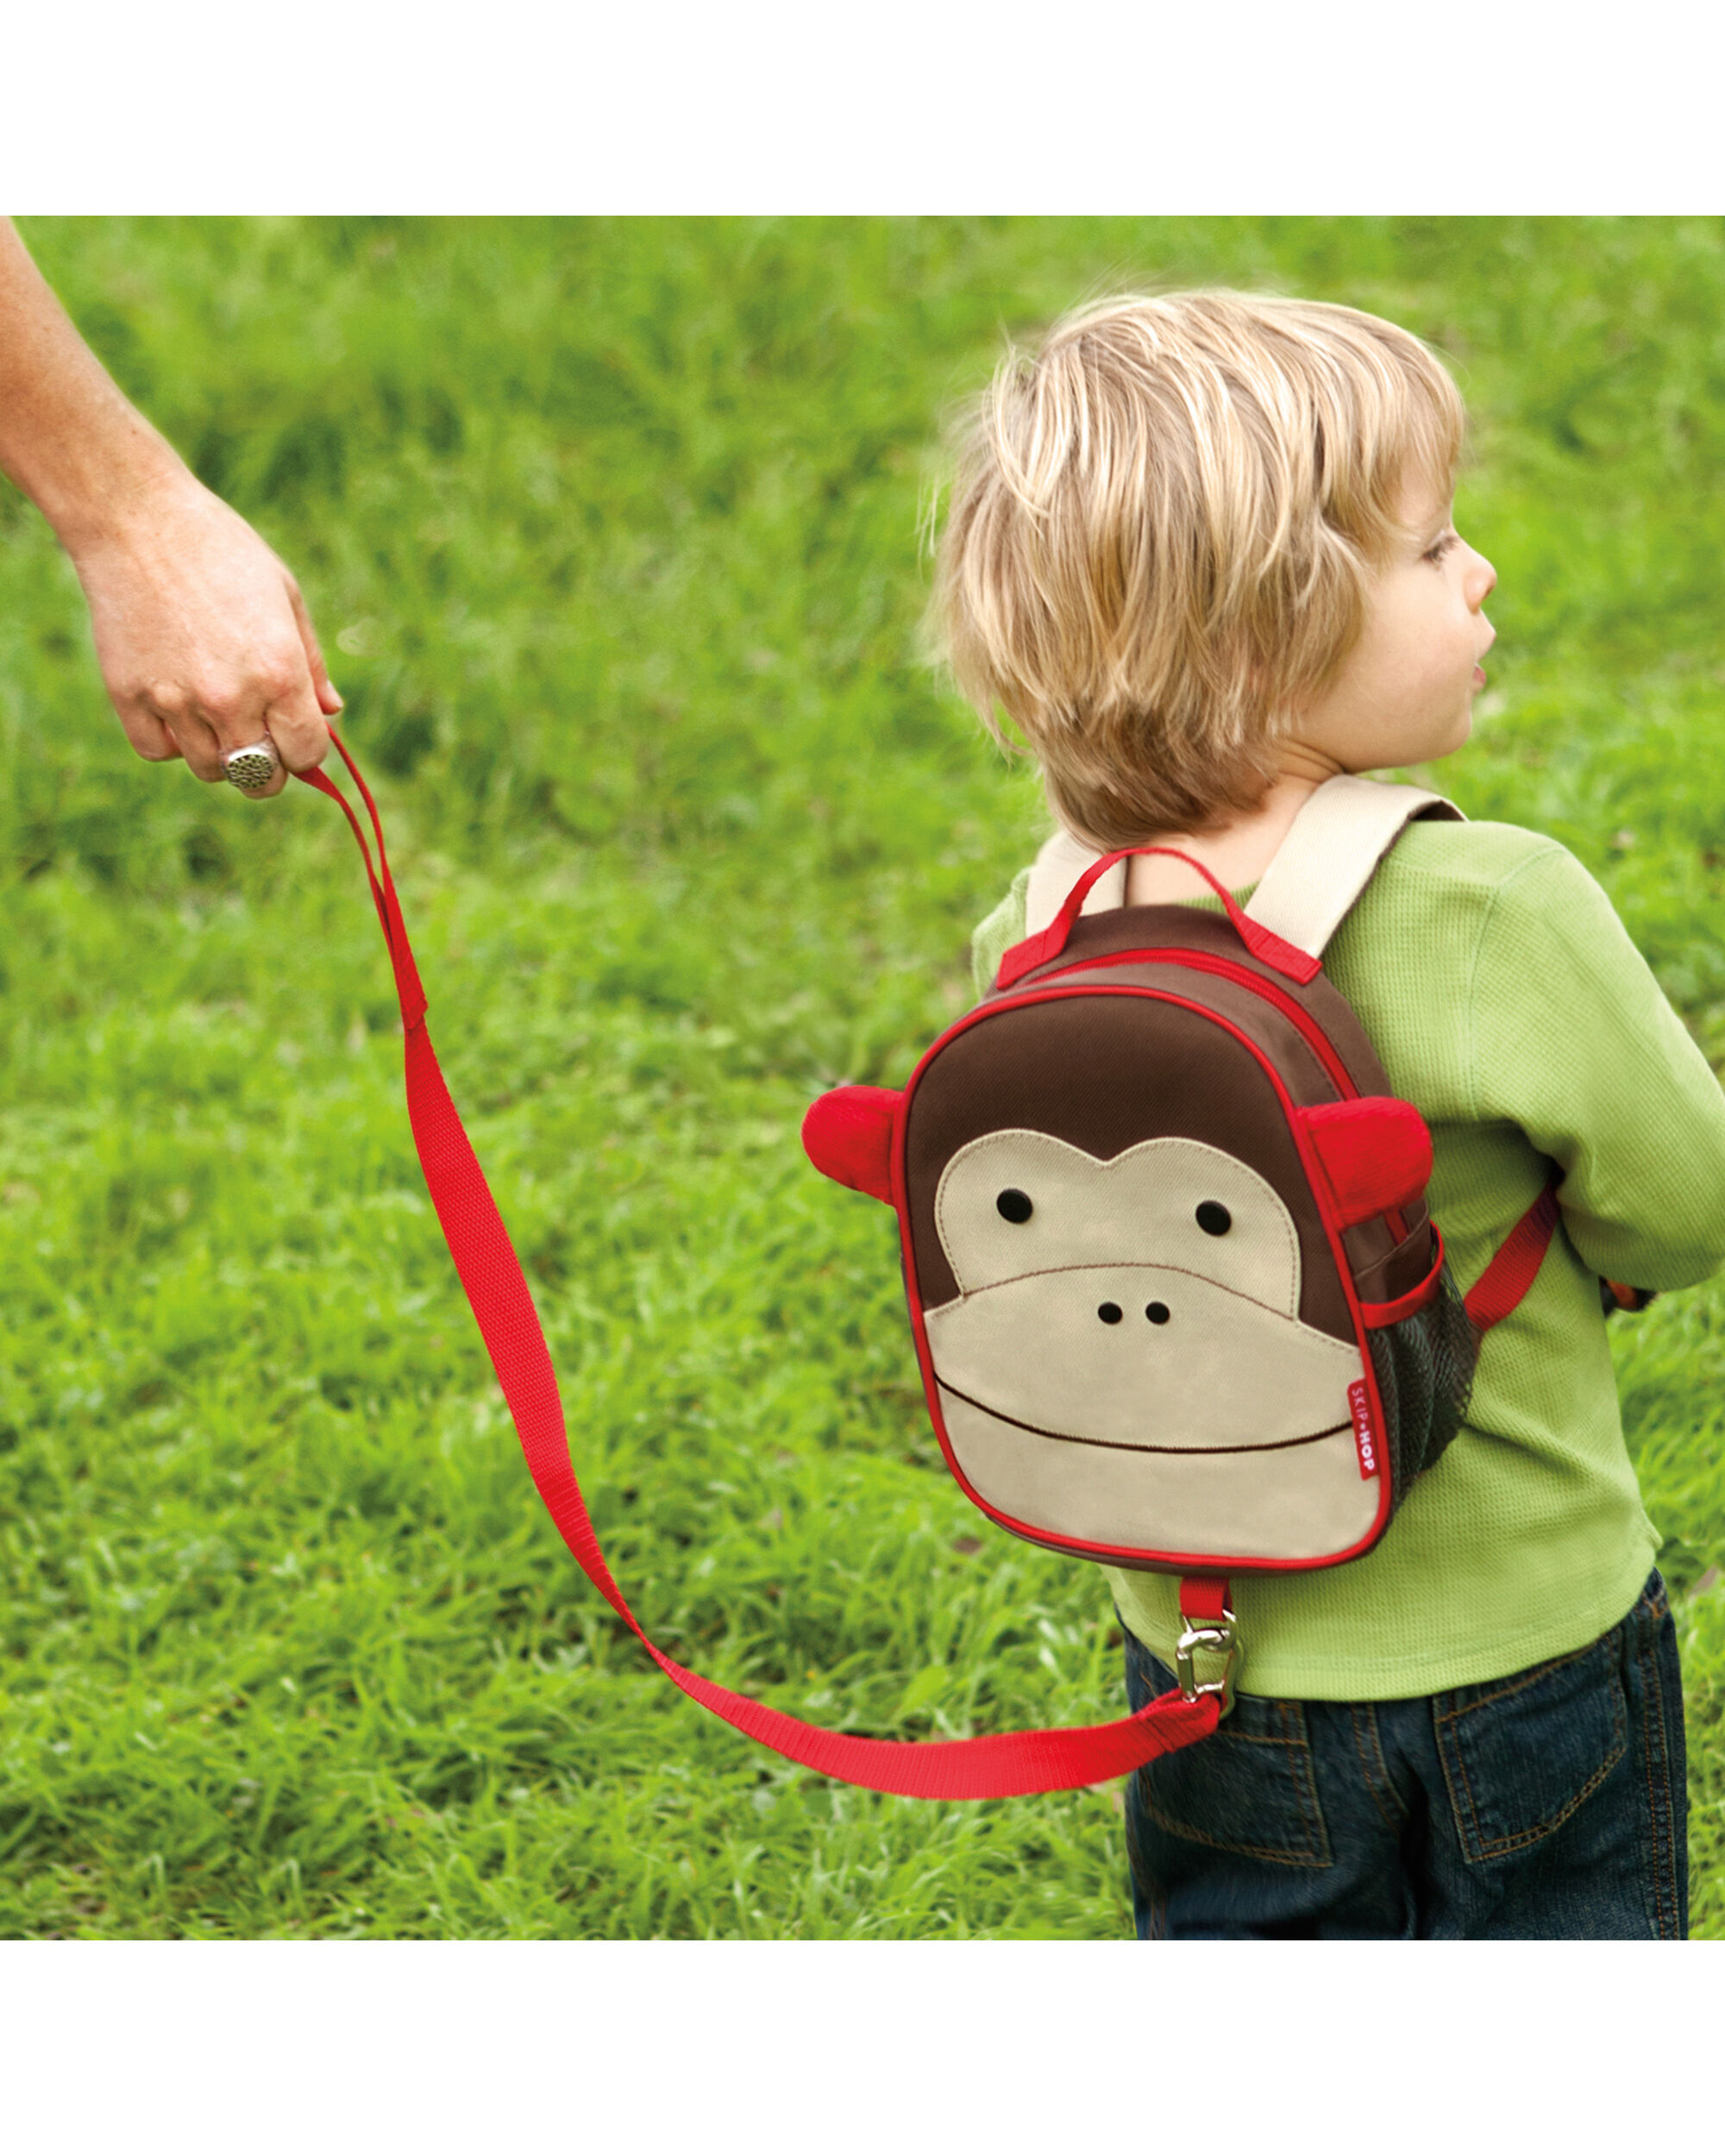 Toddler Backpack Leash for Kids & Child Safety